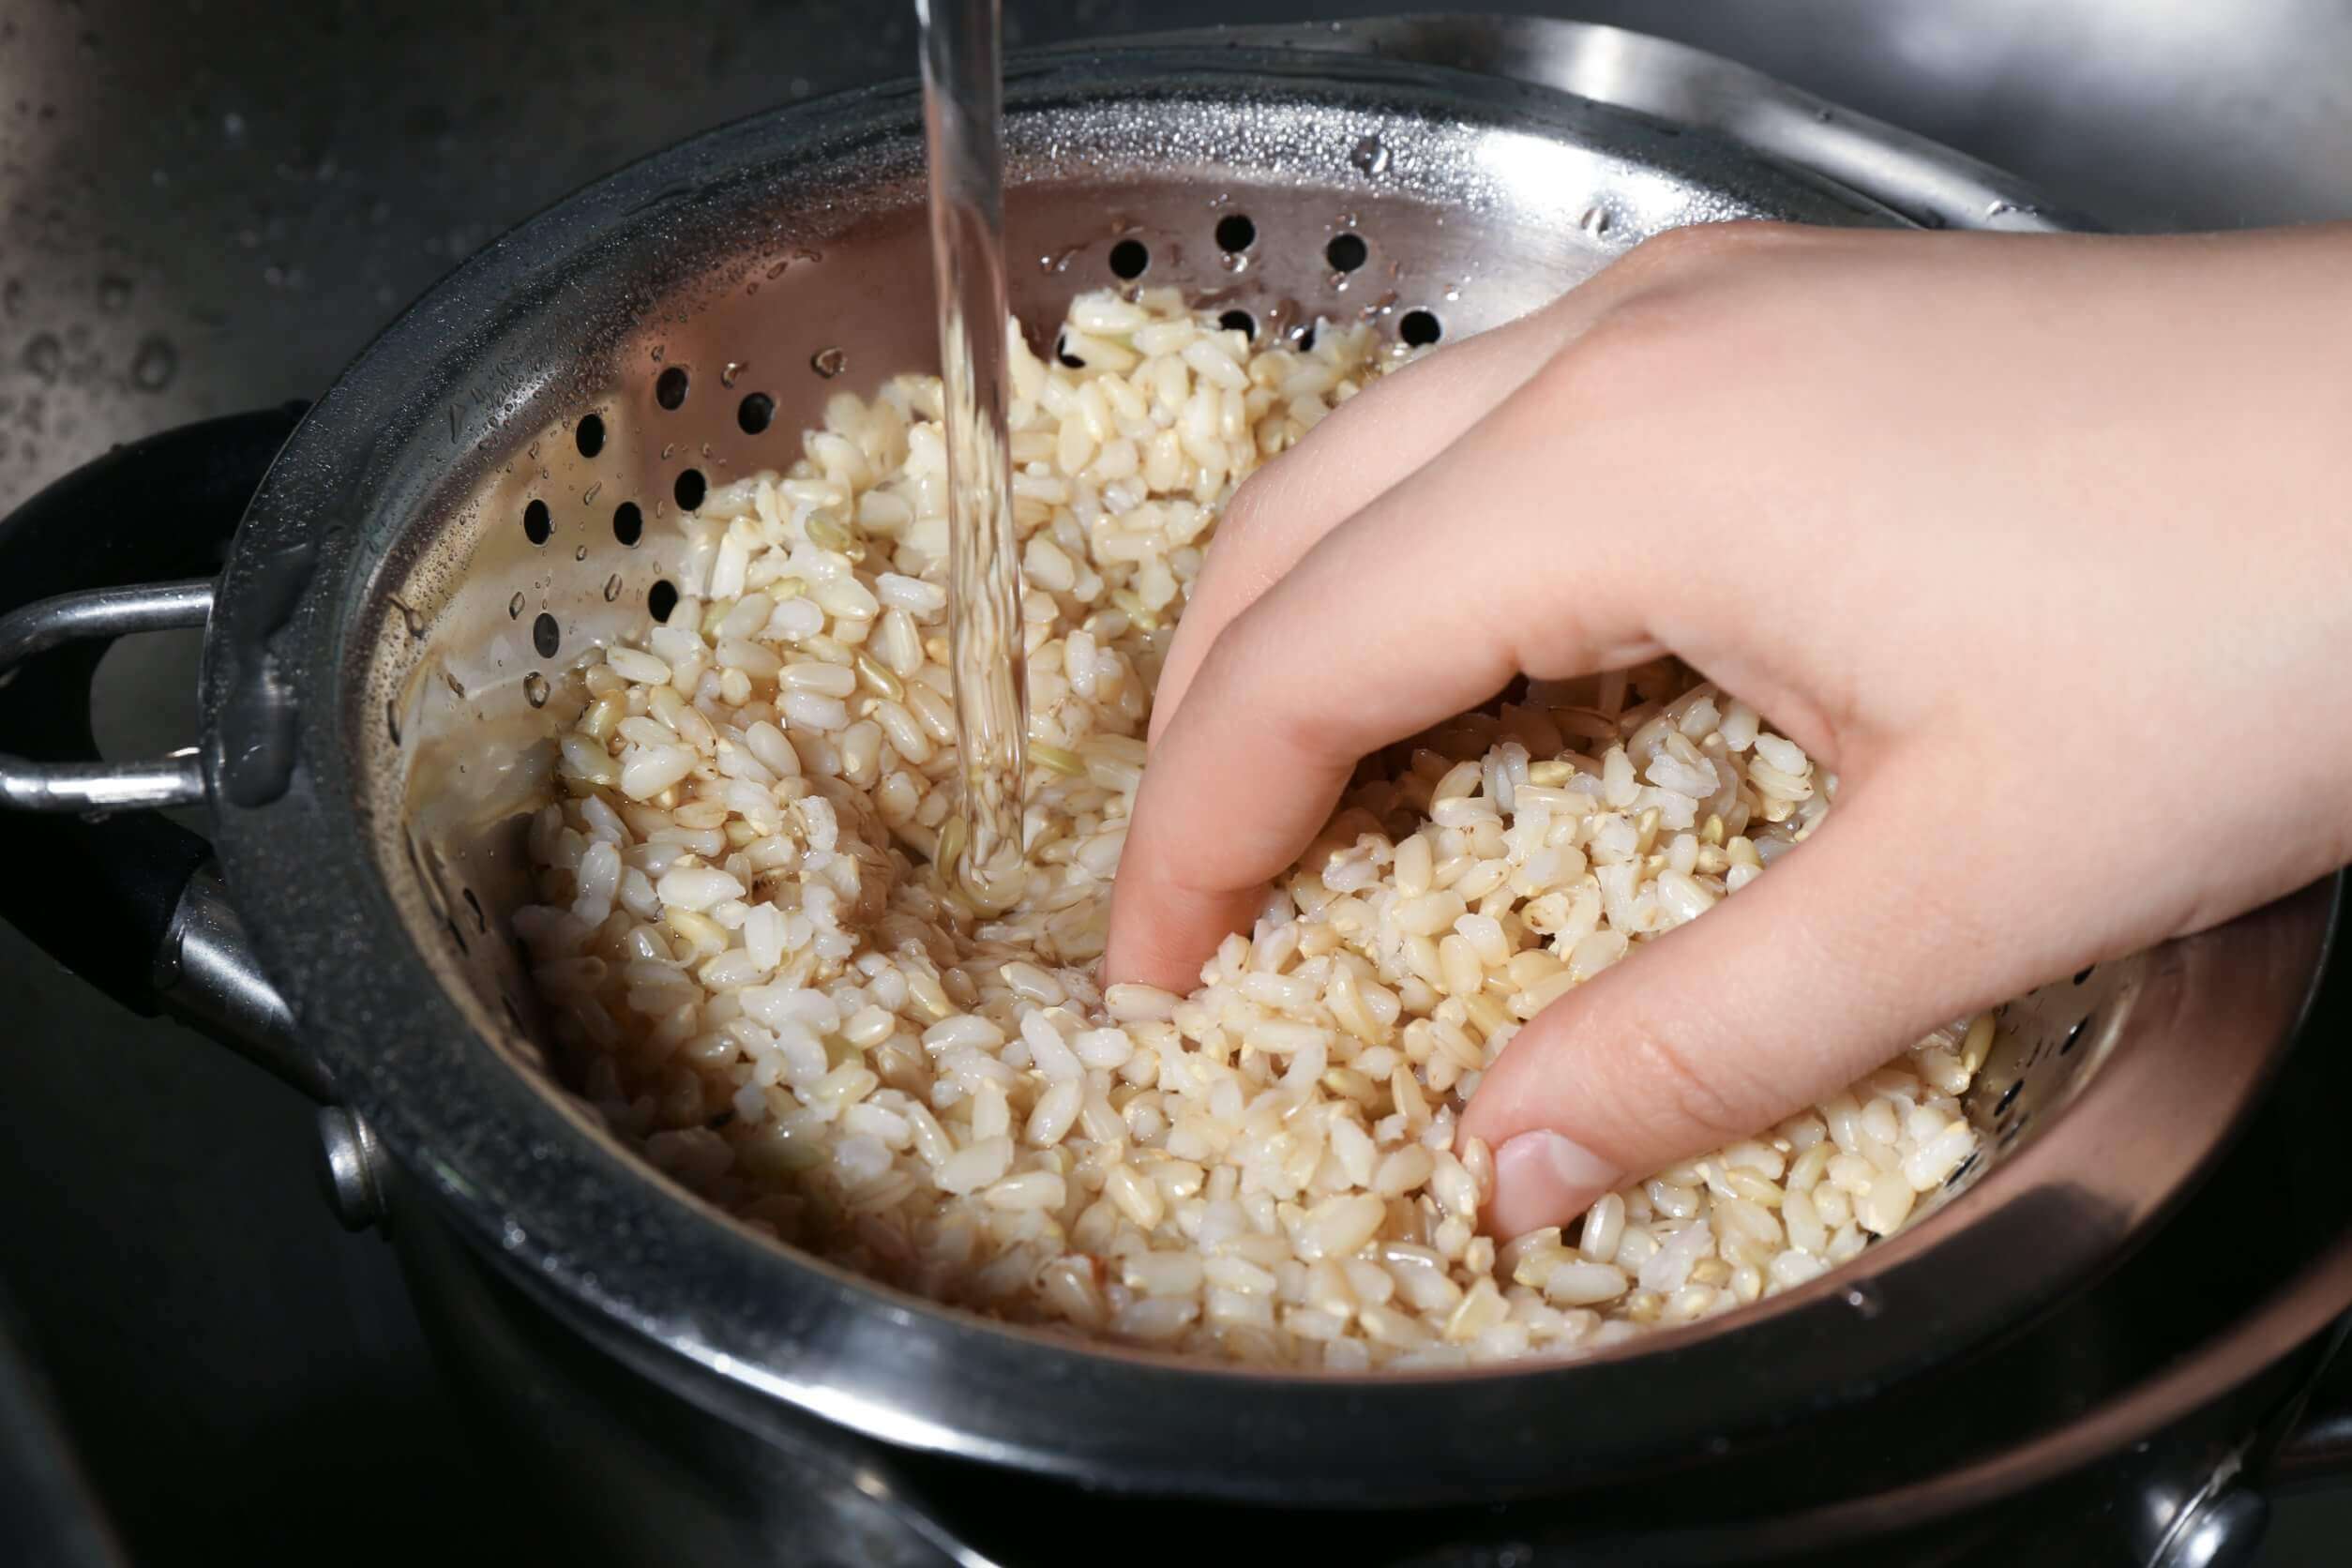 Washing Rice Under Running Water